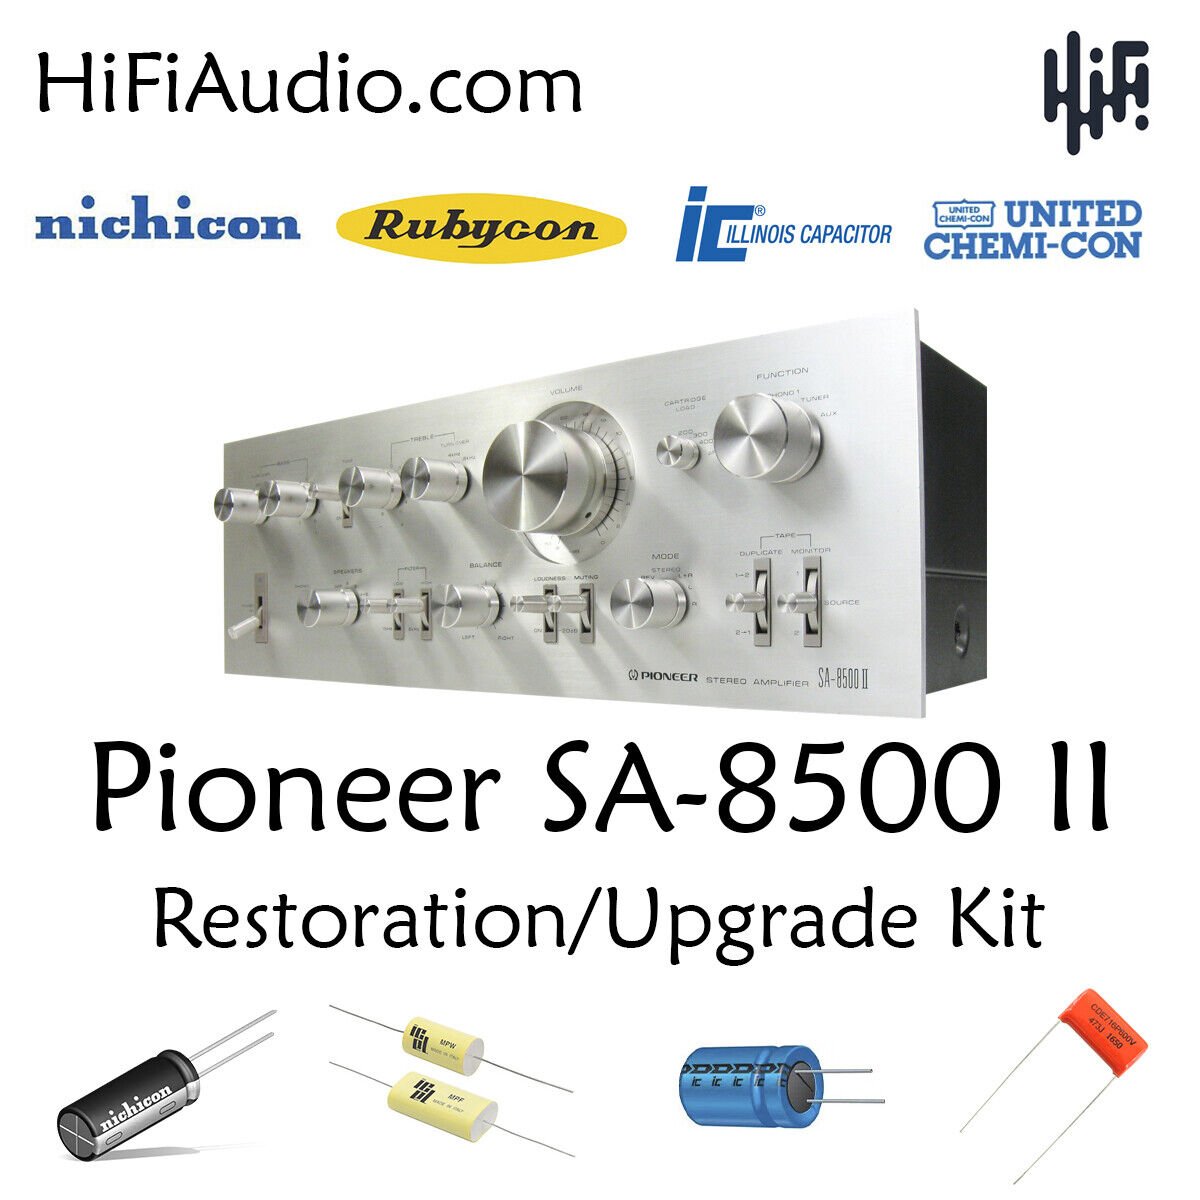 Buy Pioneer SA-8500 II restoration kit - HiFi Audio